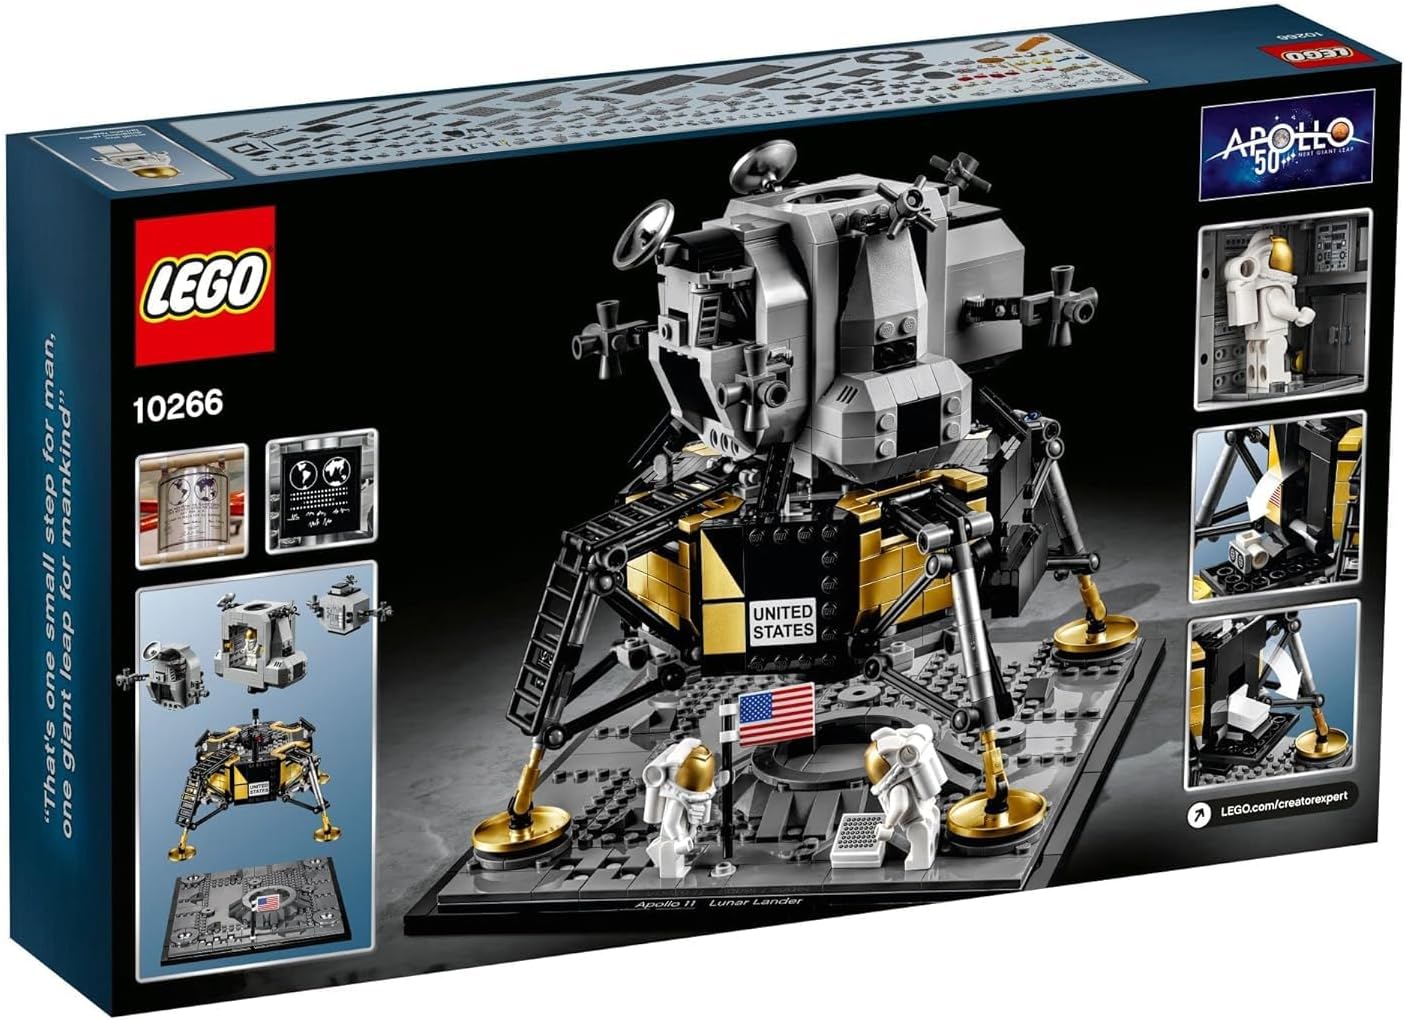 Lego Creator Expert N.A.S.A Apollo 11 Lunar Lander 10266 Building Kit, 1,087 Pieces